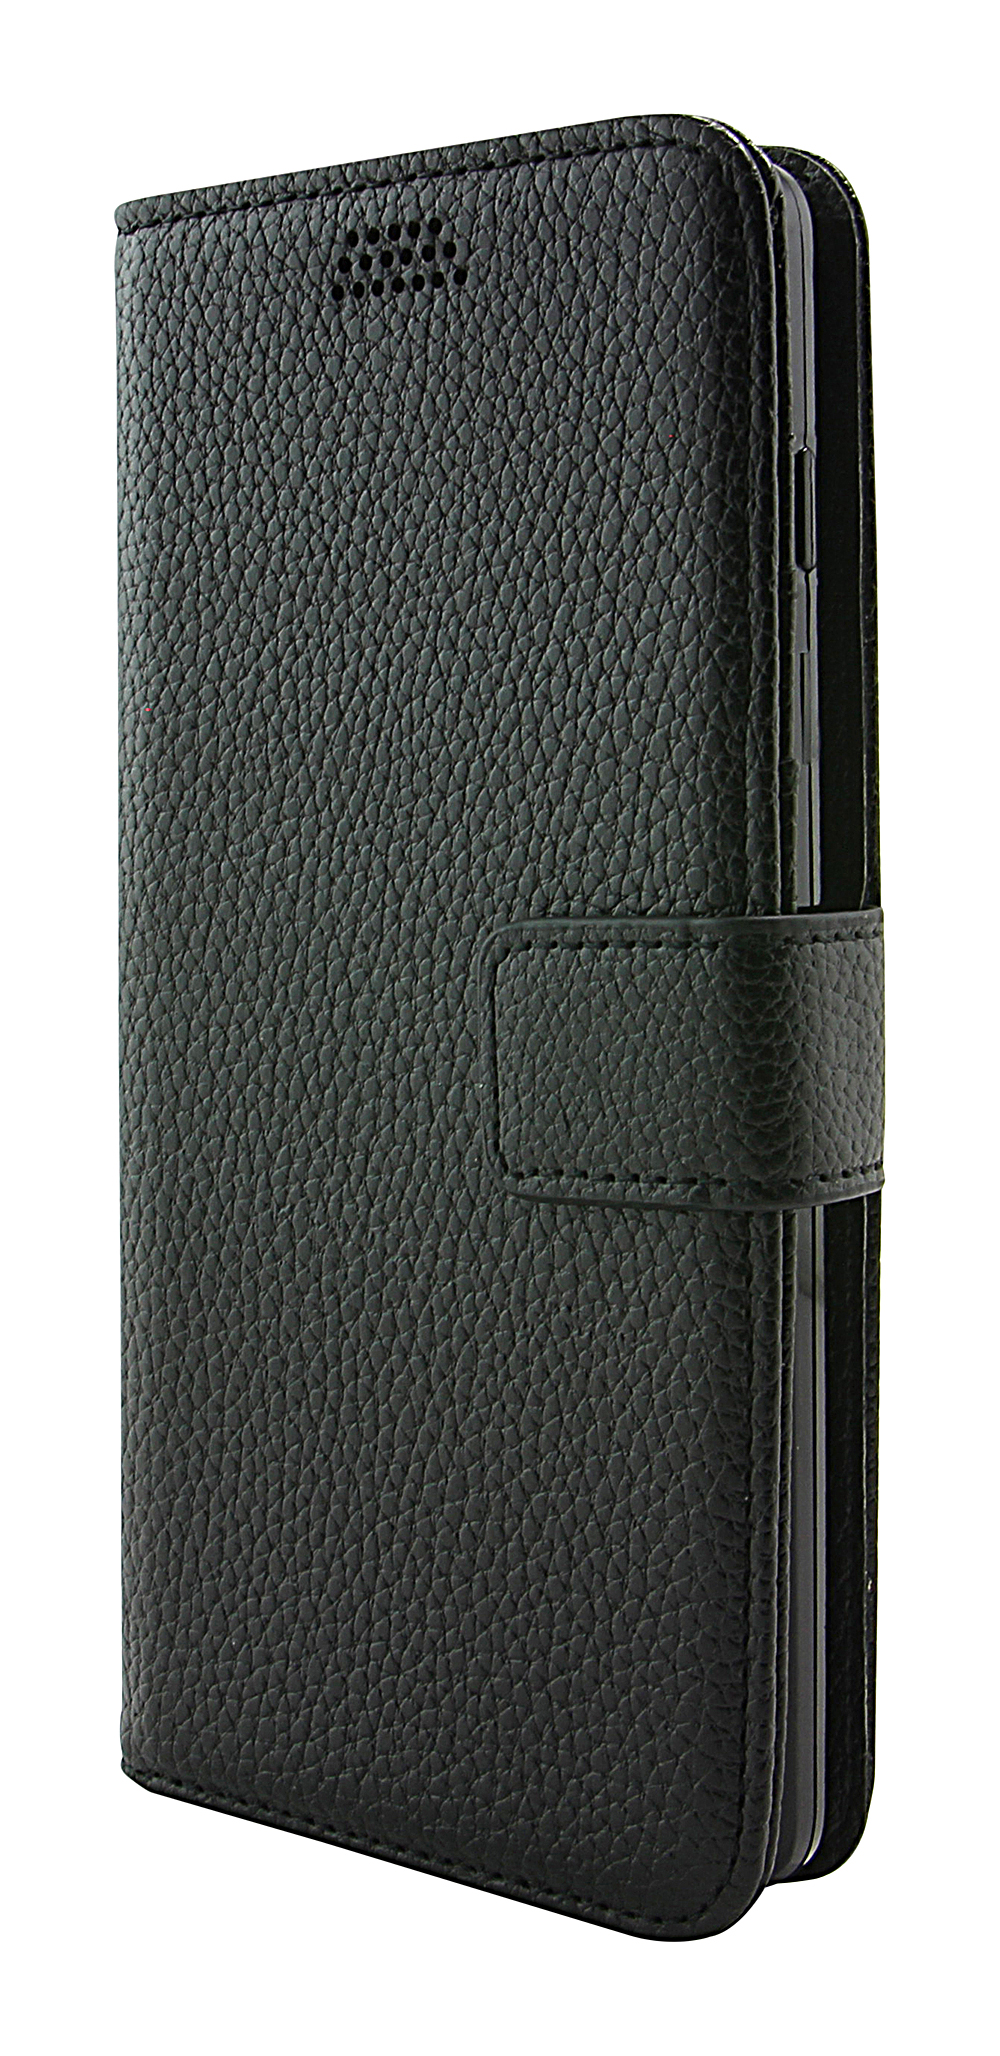 billigamobilskydd.seNew Standcase Wallet Sony Xperia XZ1 Compact (G8441)